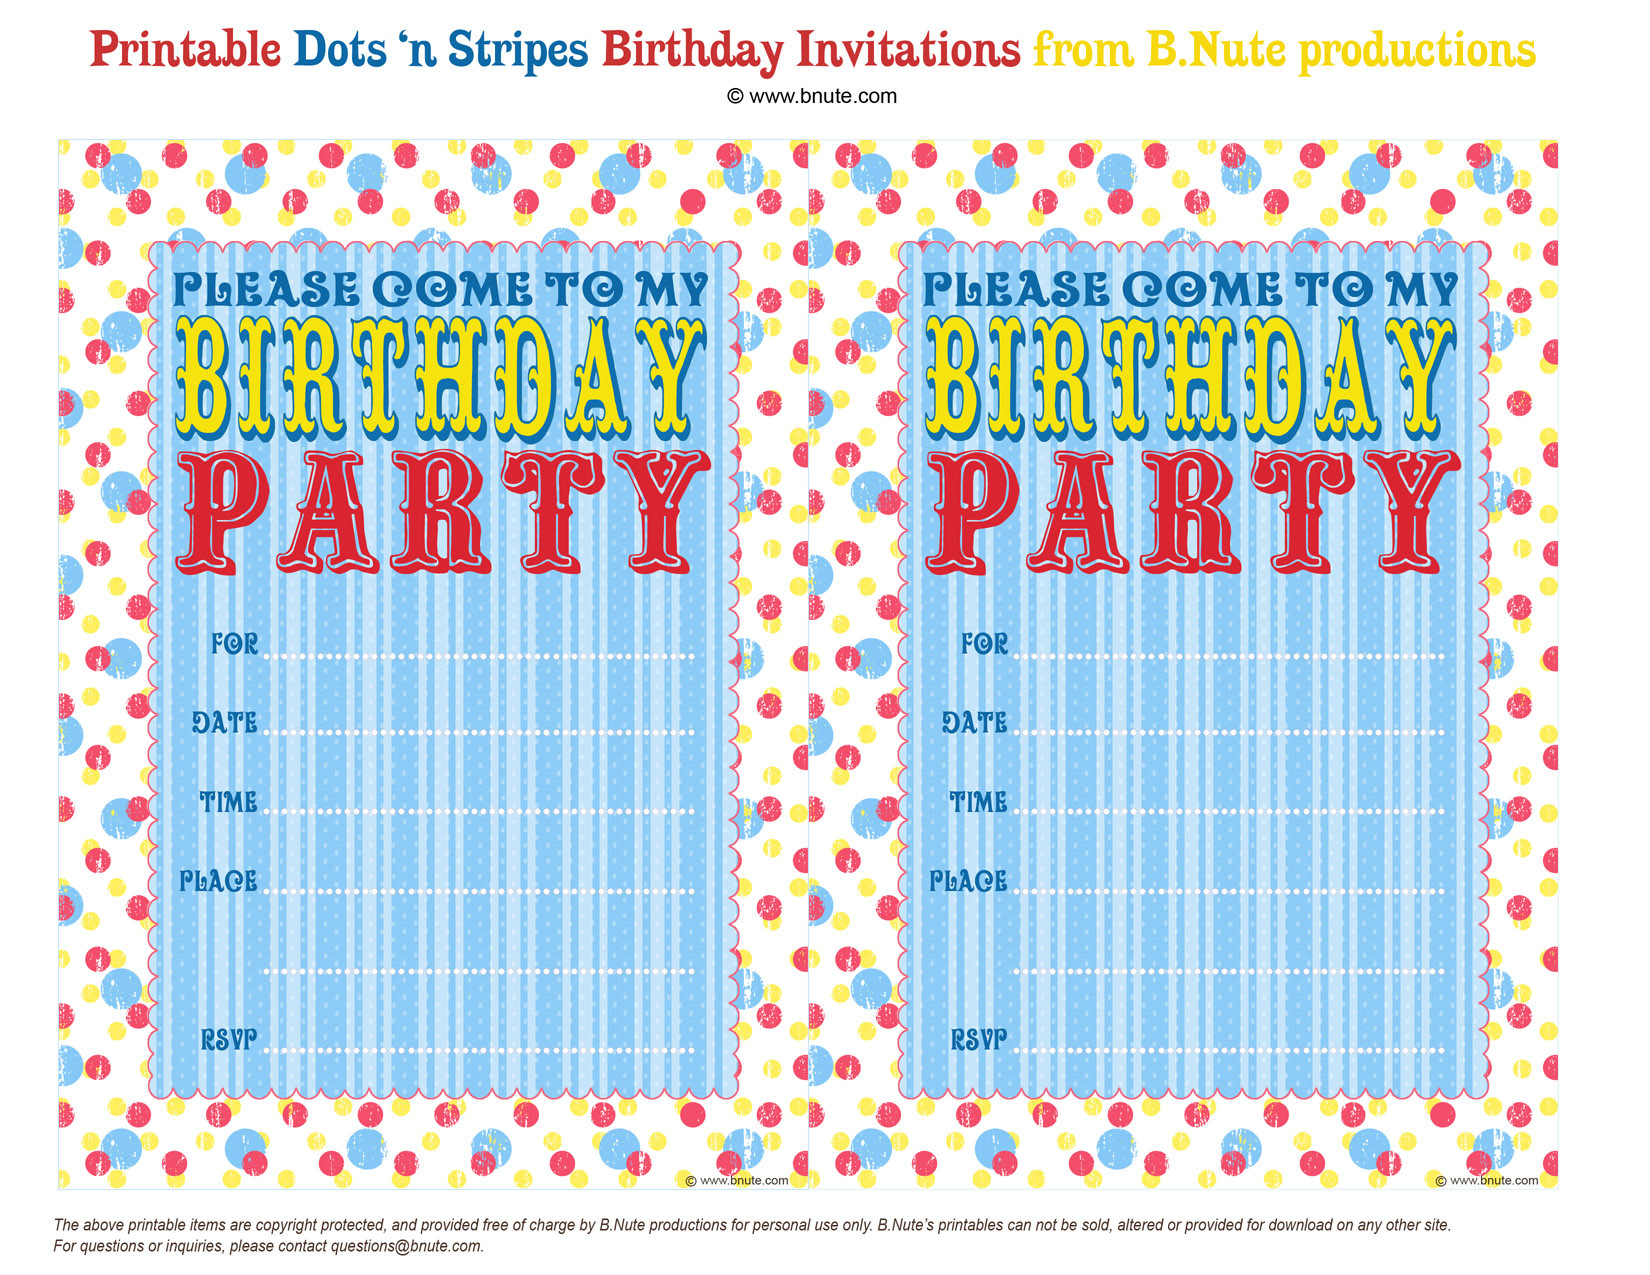 Printed Birthday Invitations
 bnute productions Free Printable Dots n Stripes Birthday